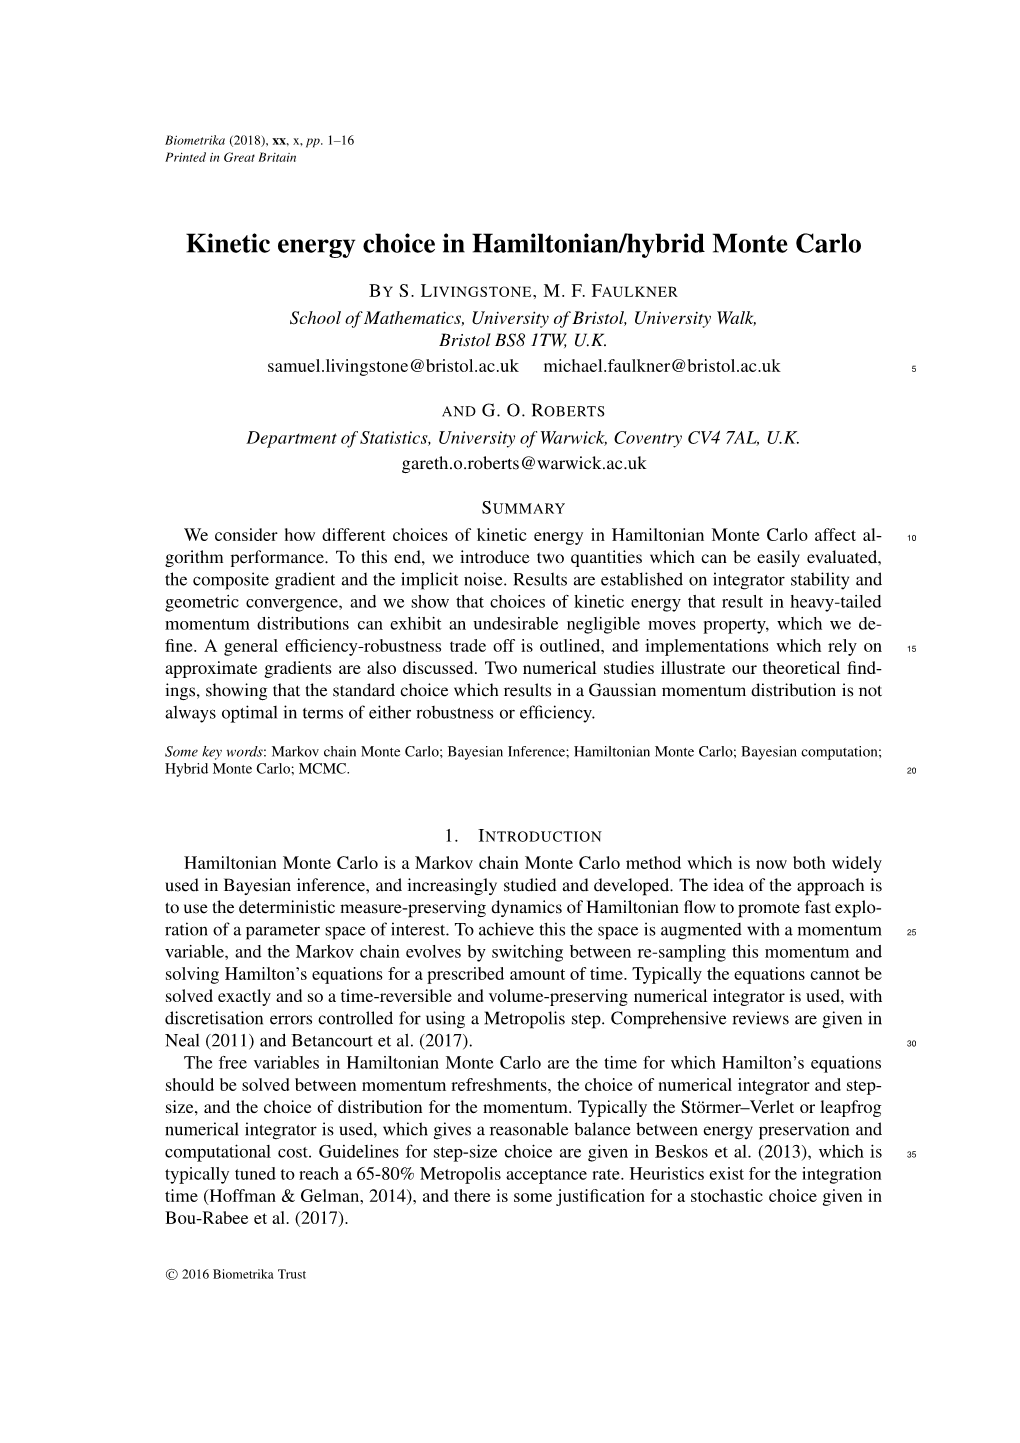 Kinetic Energy Choice in Hamiltonian/Hybrid Monte Carlo